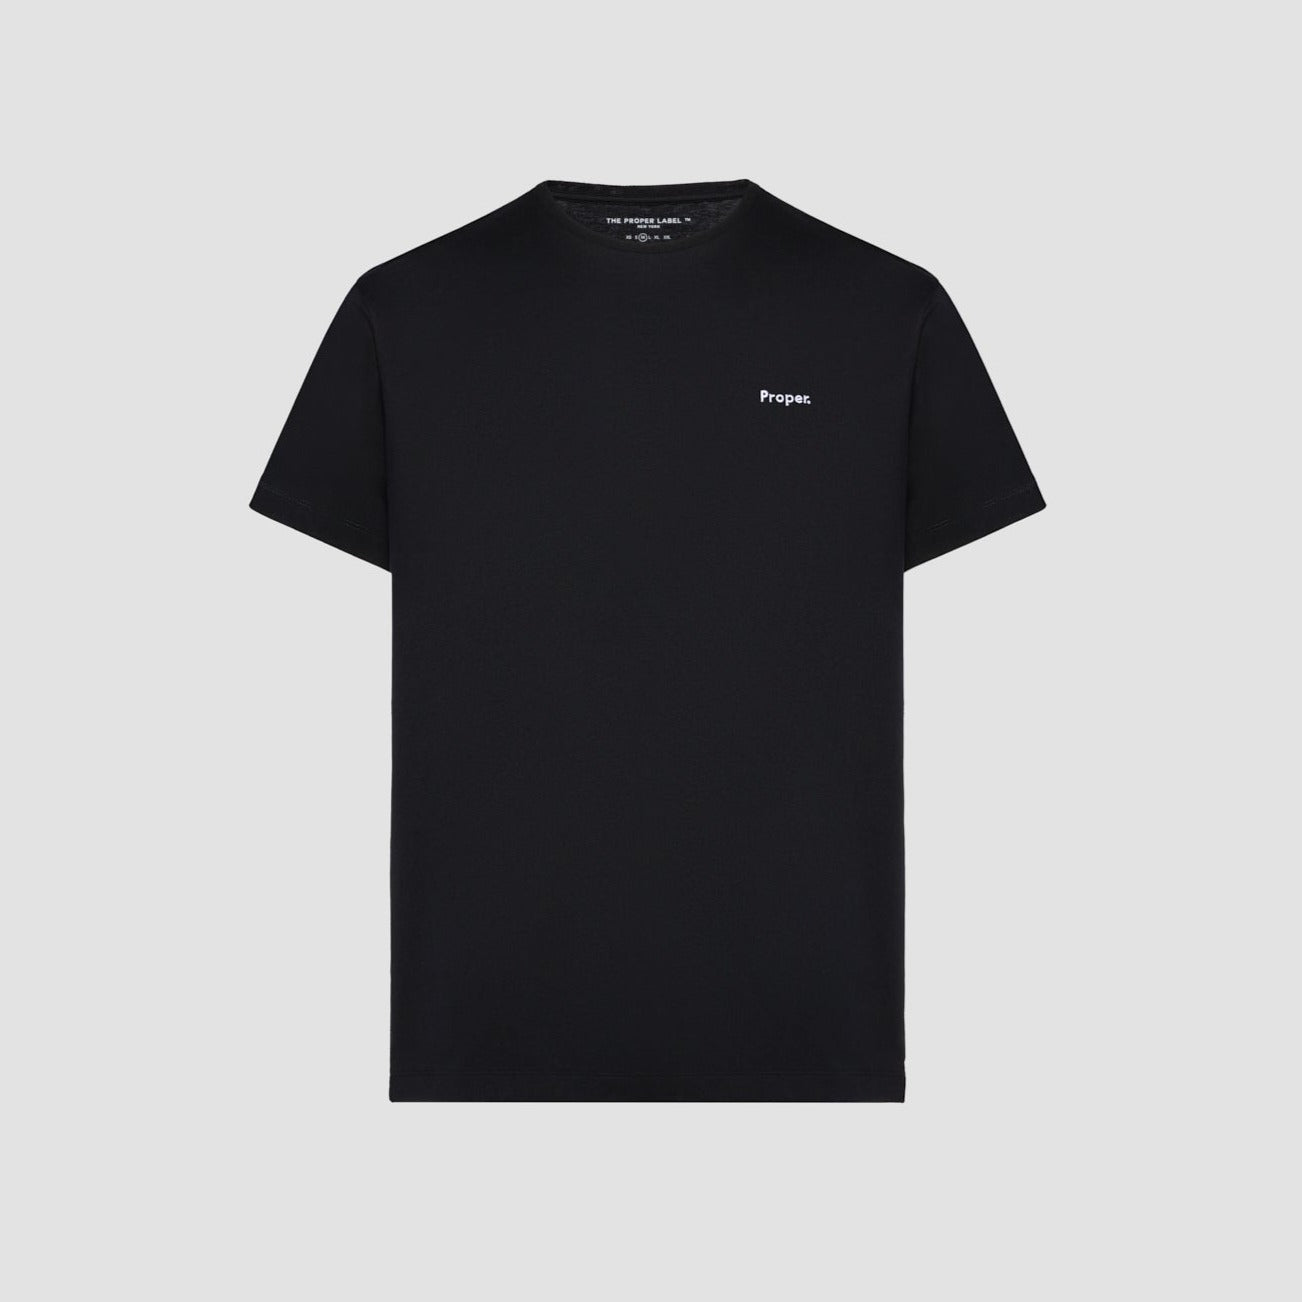 The Proper Tee Shirt ™ Black [White Proper. Embroidery] - The Proper Label ™